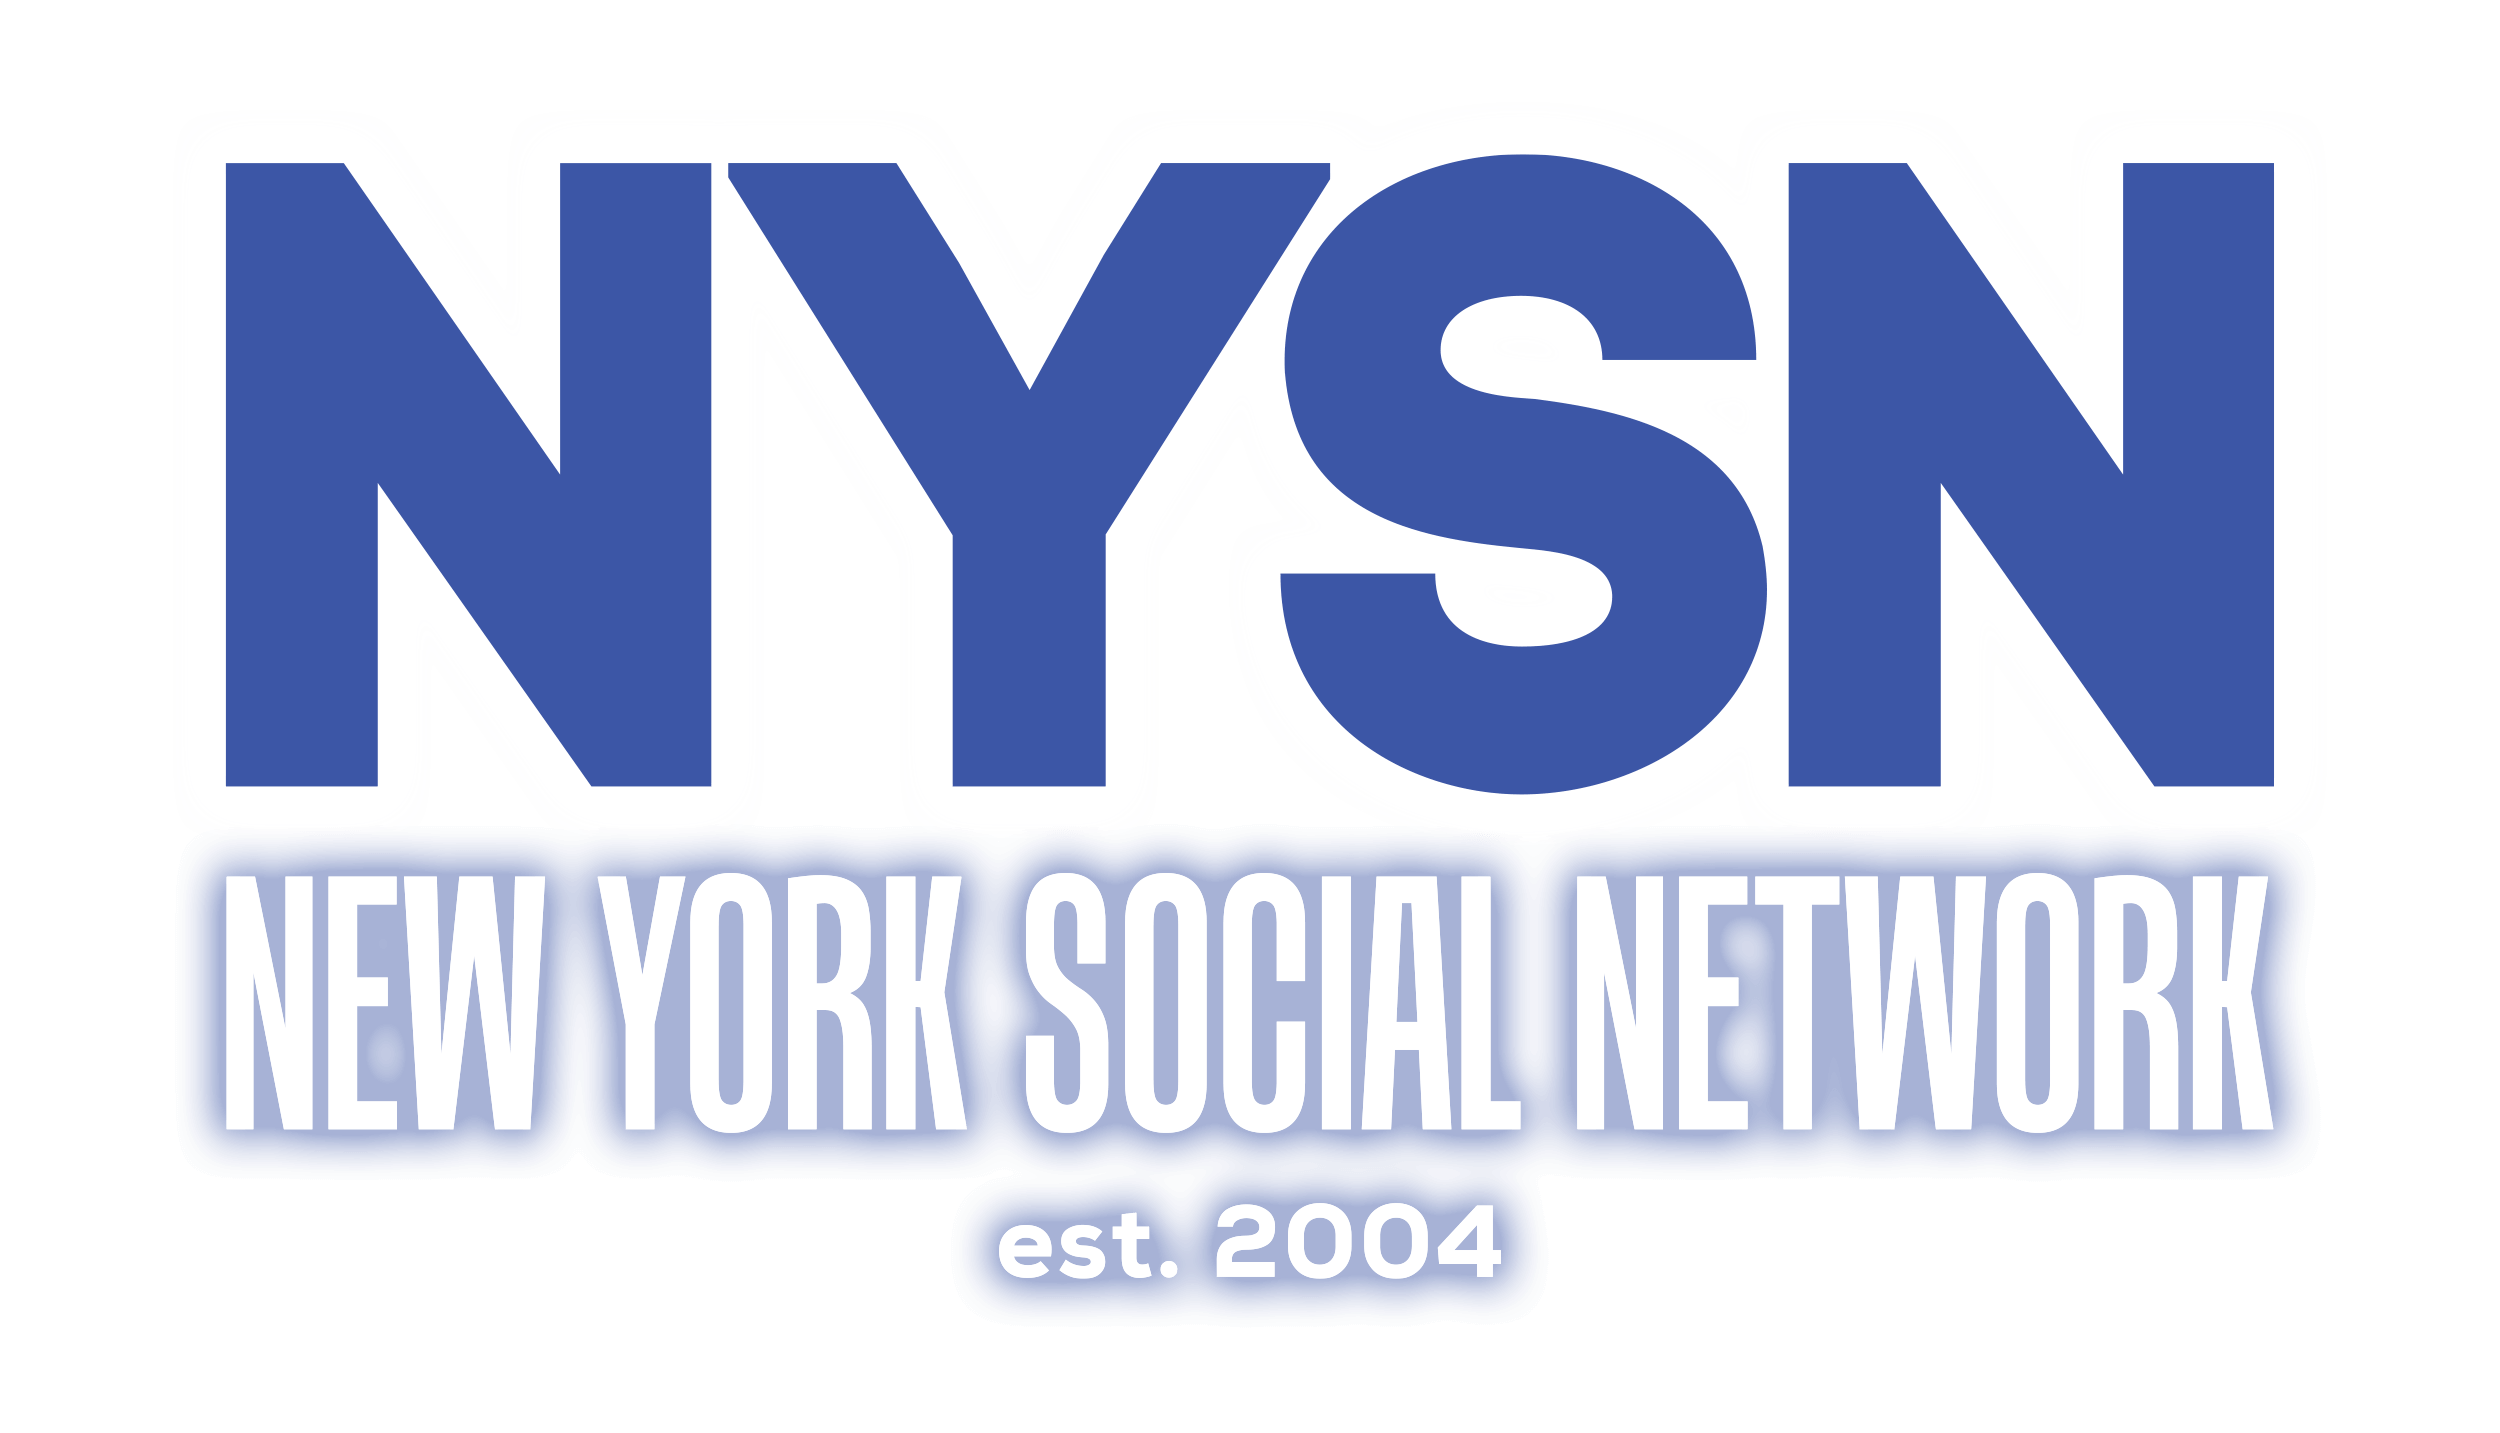 New York Social Network